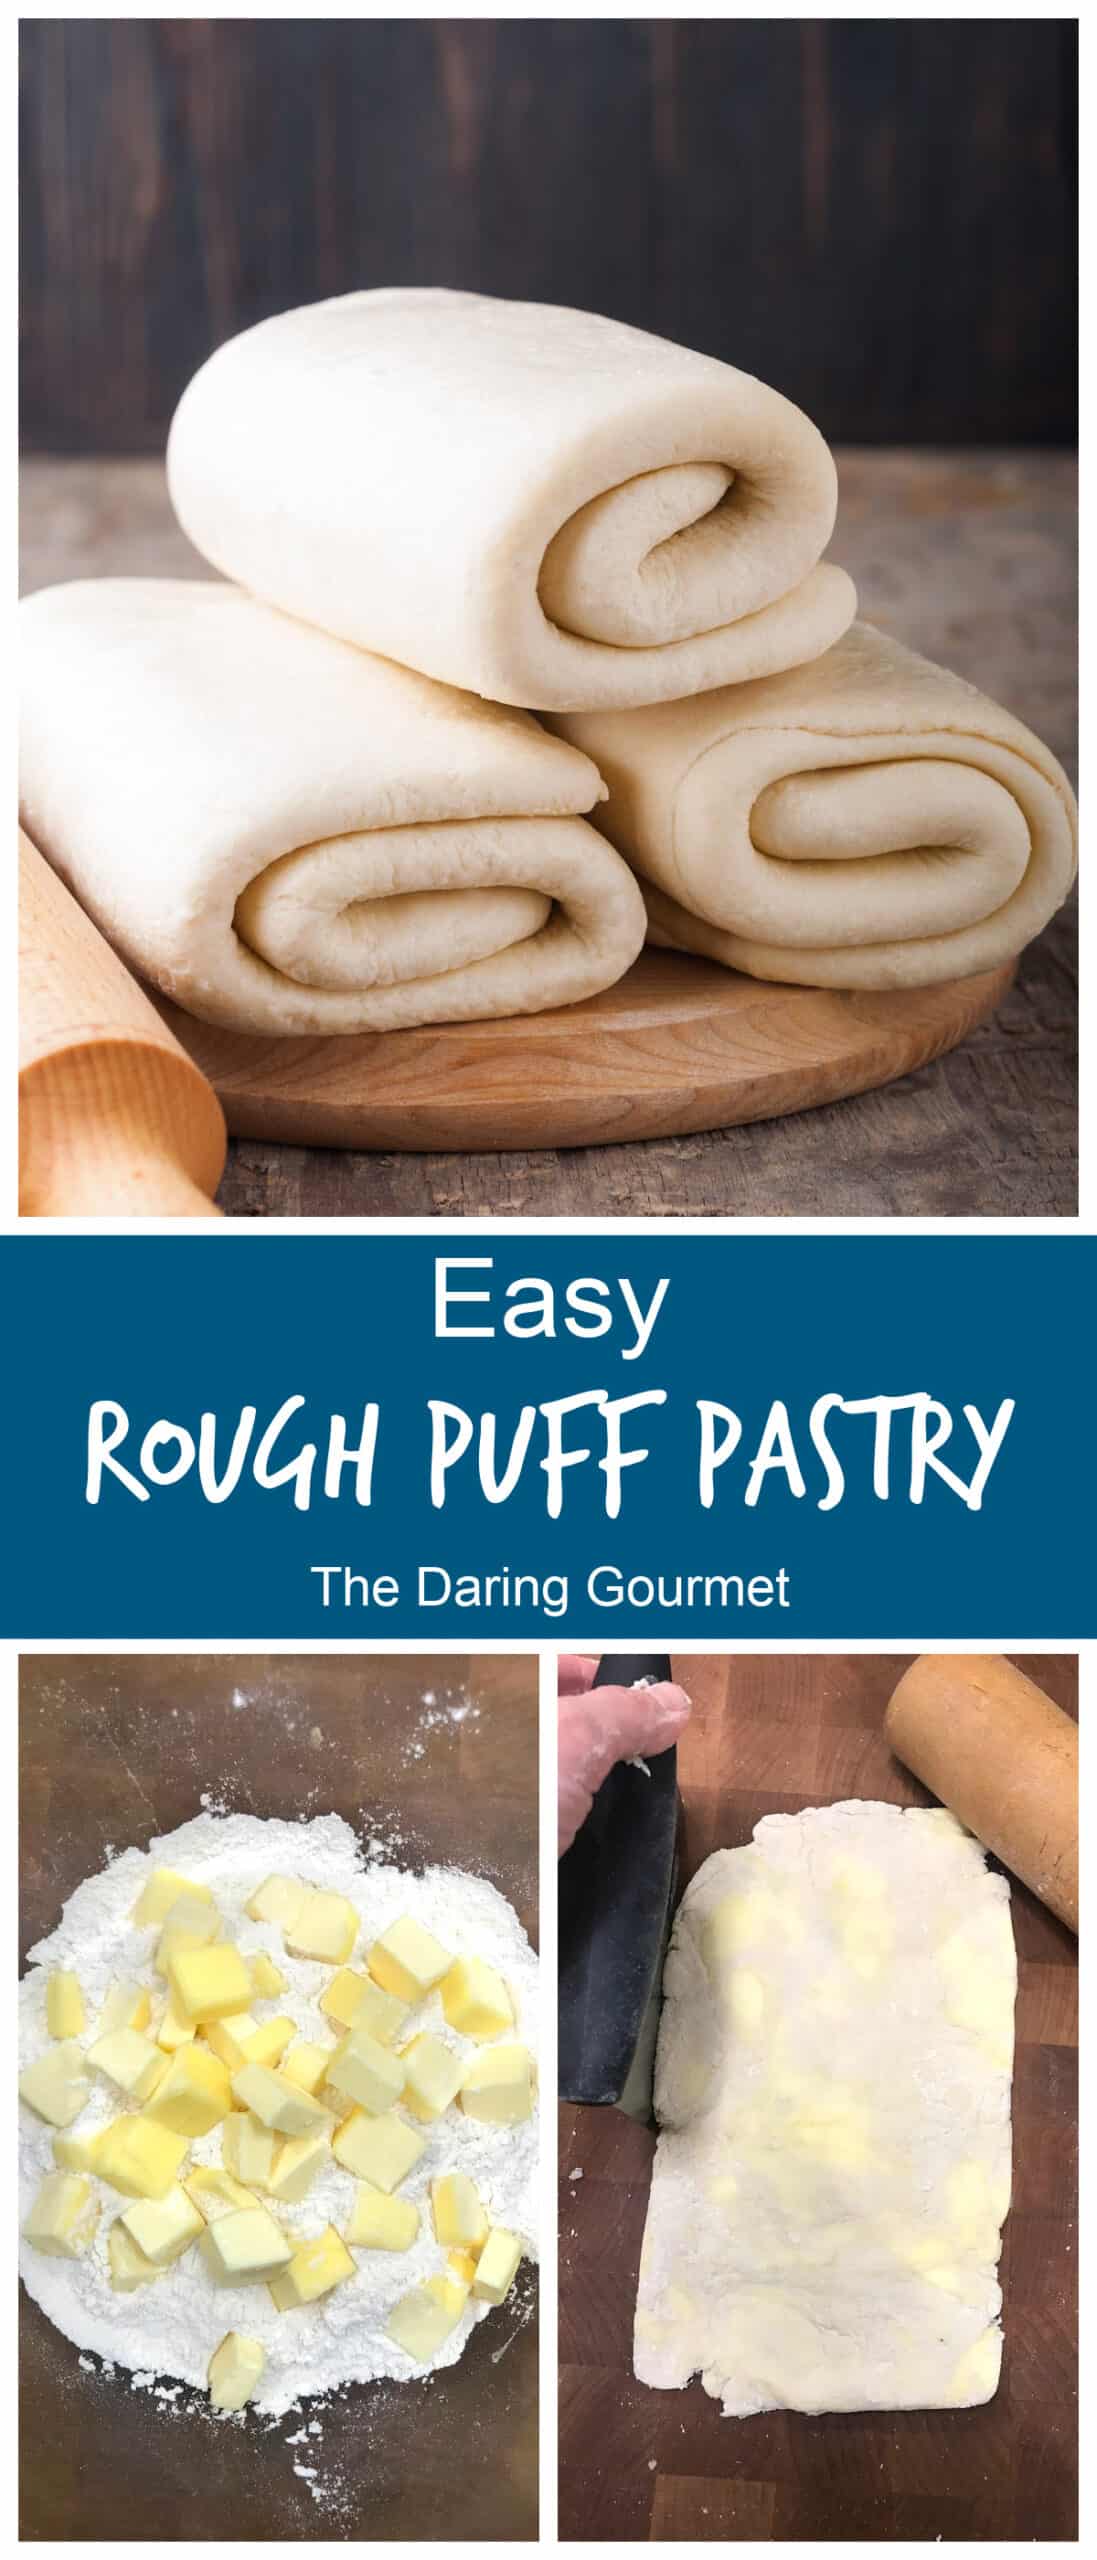 rough puff pastry recipe easy quick fast